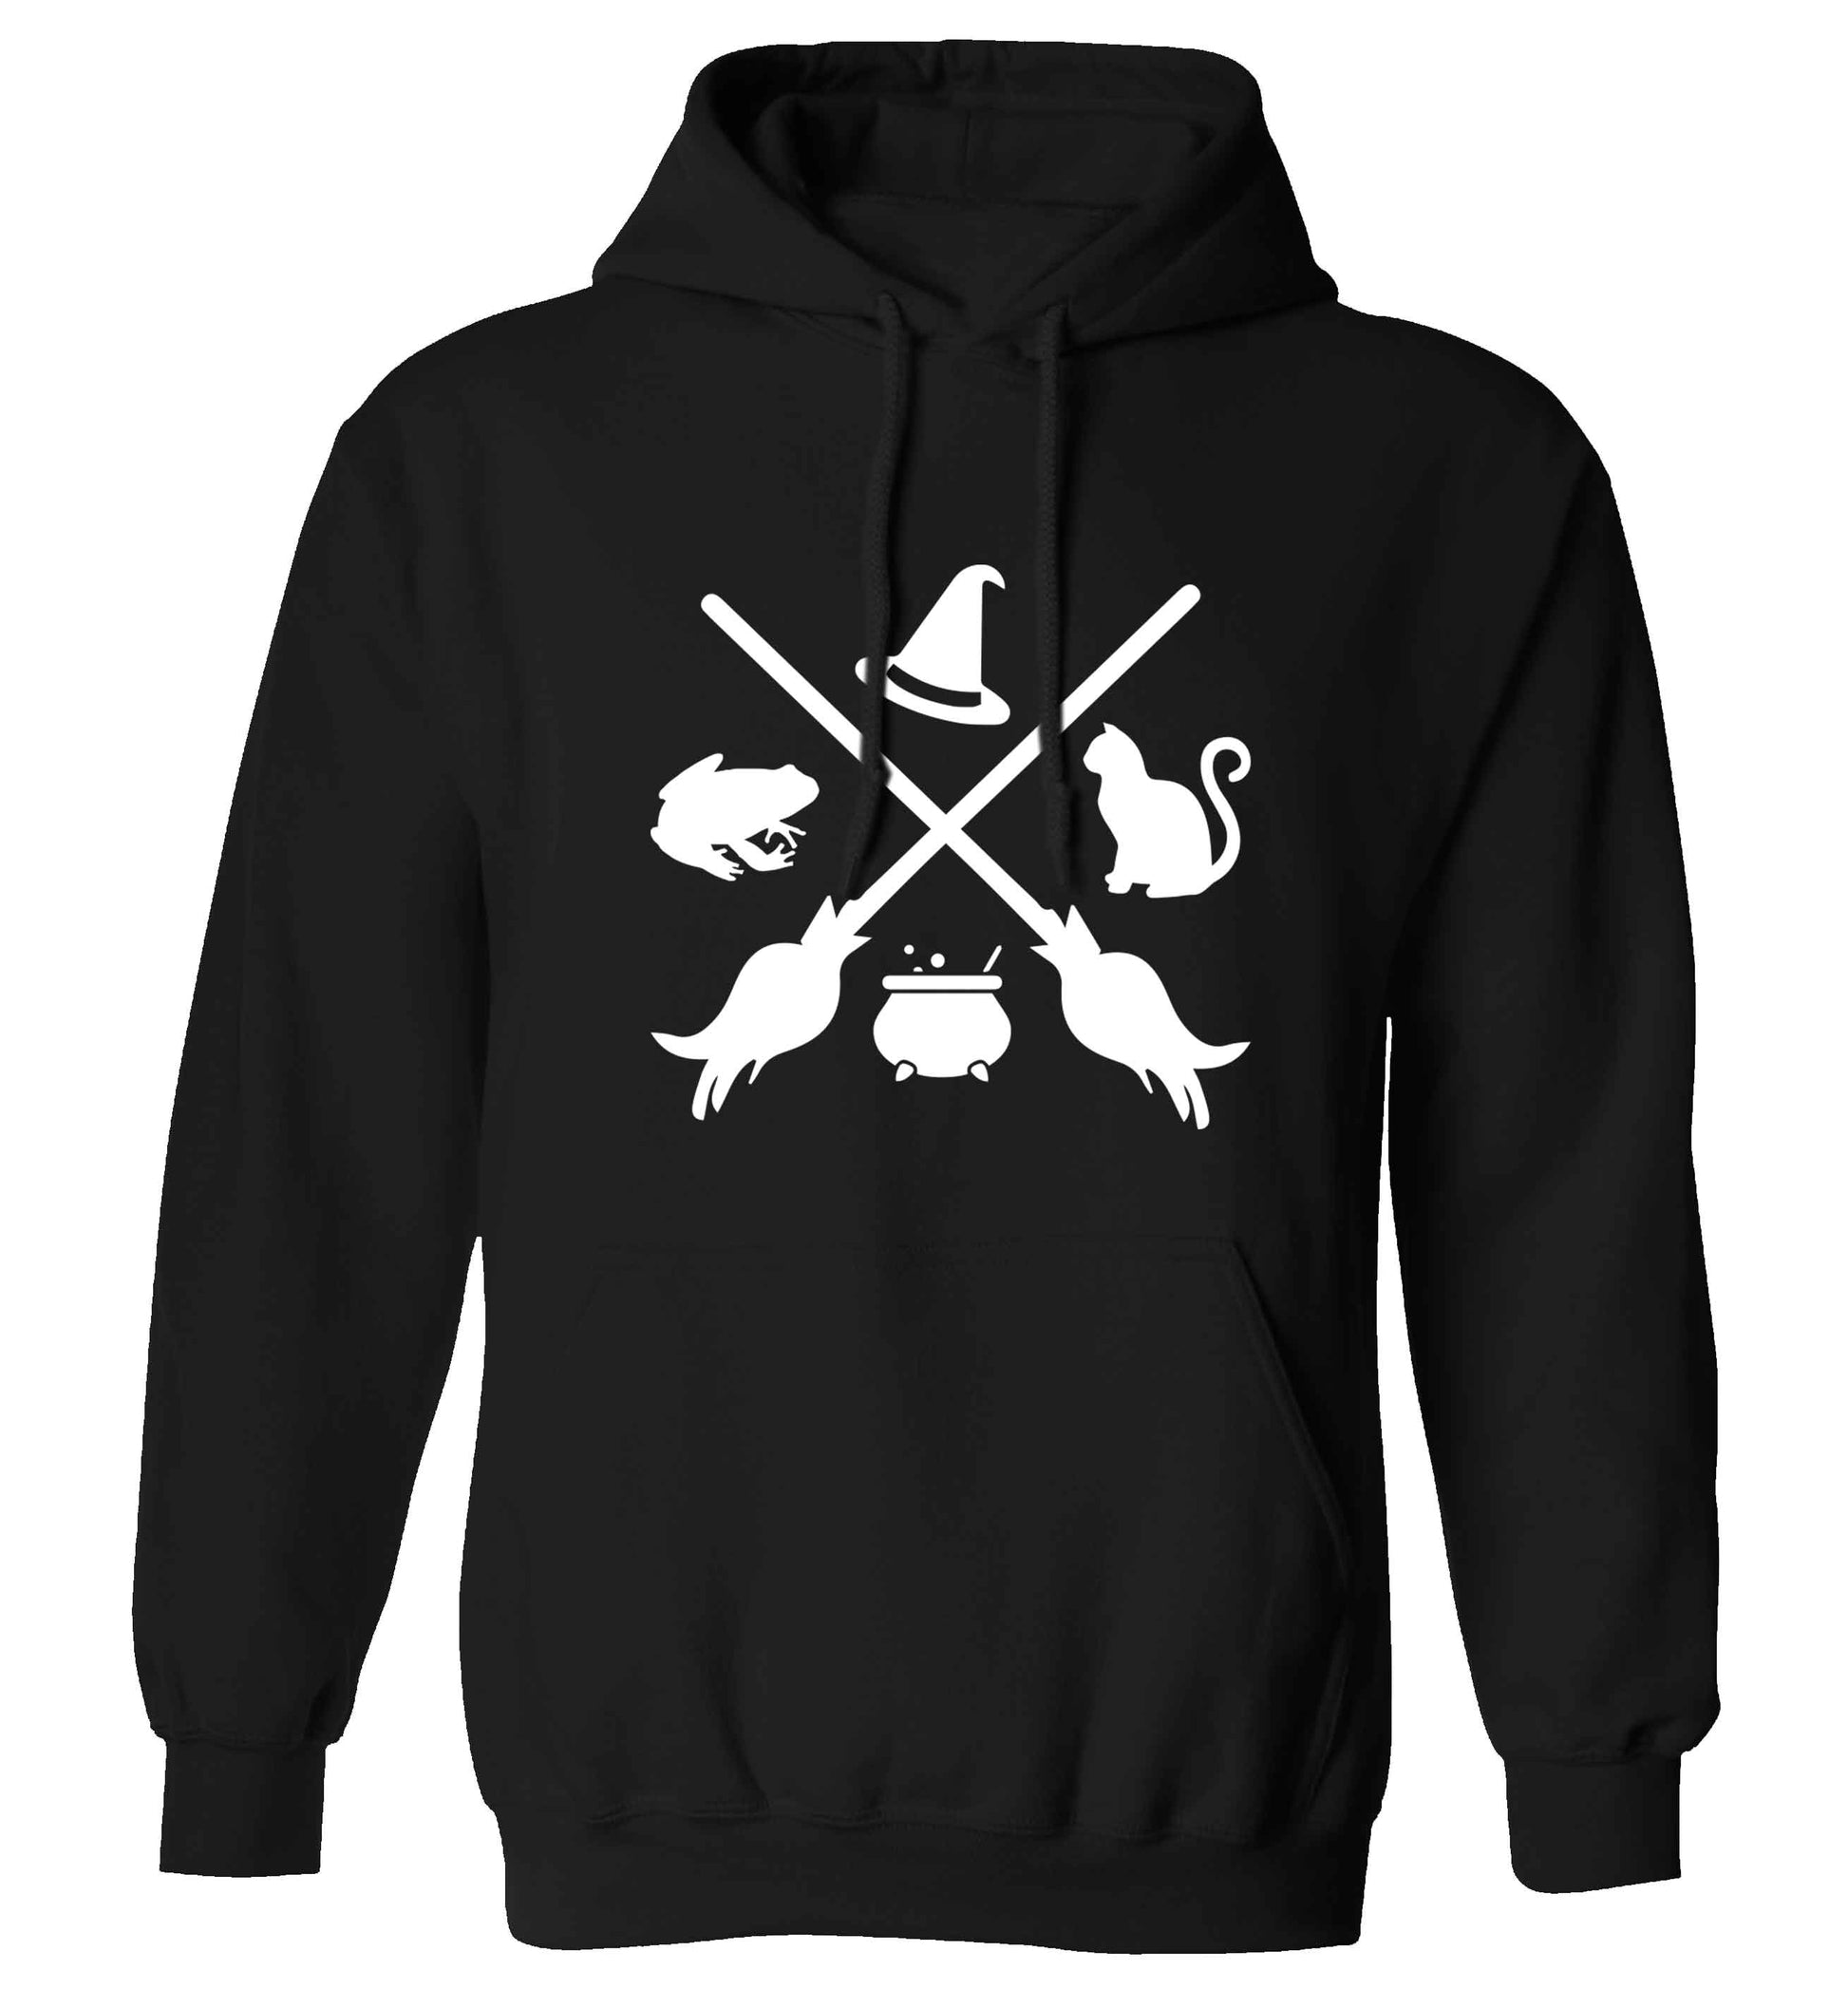 Witch symbol adults unisex black hoodie 2XL